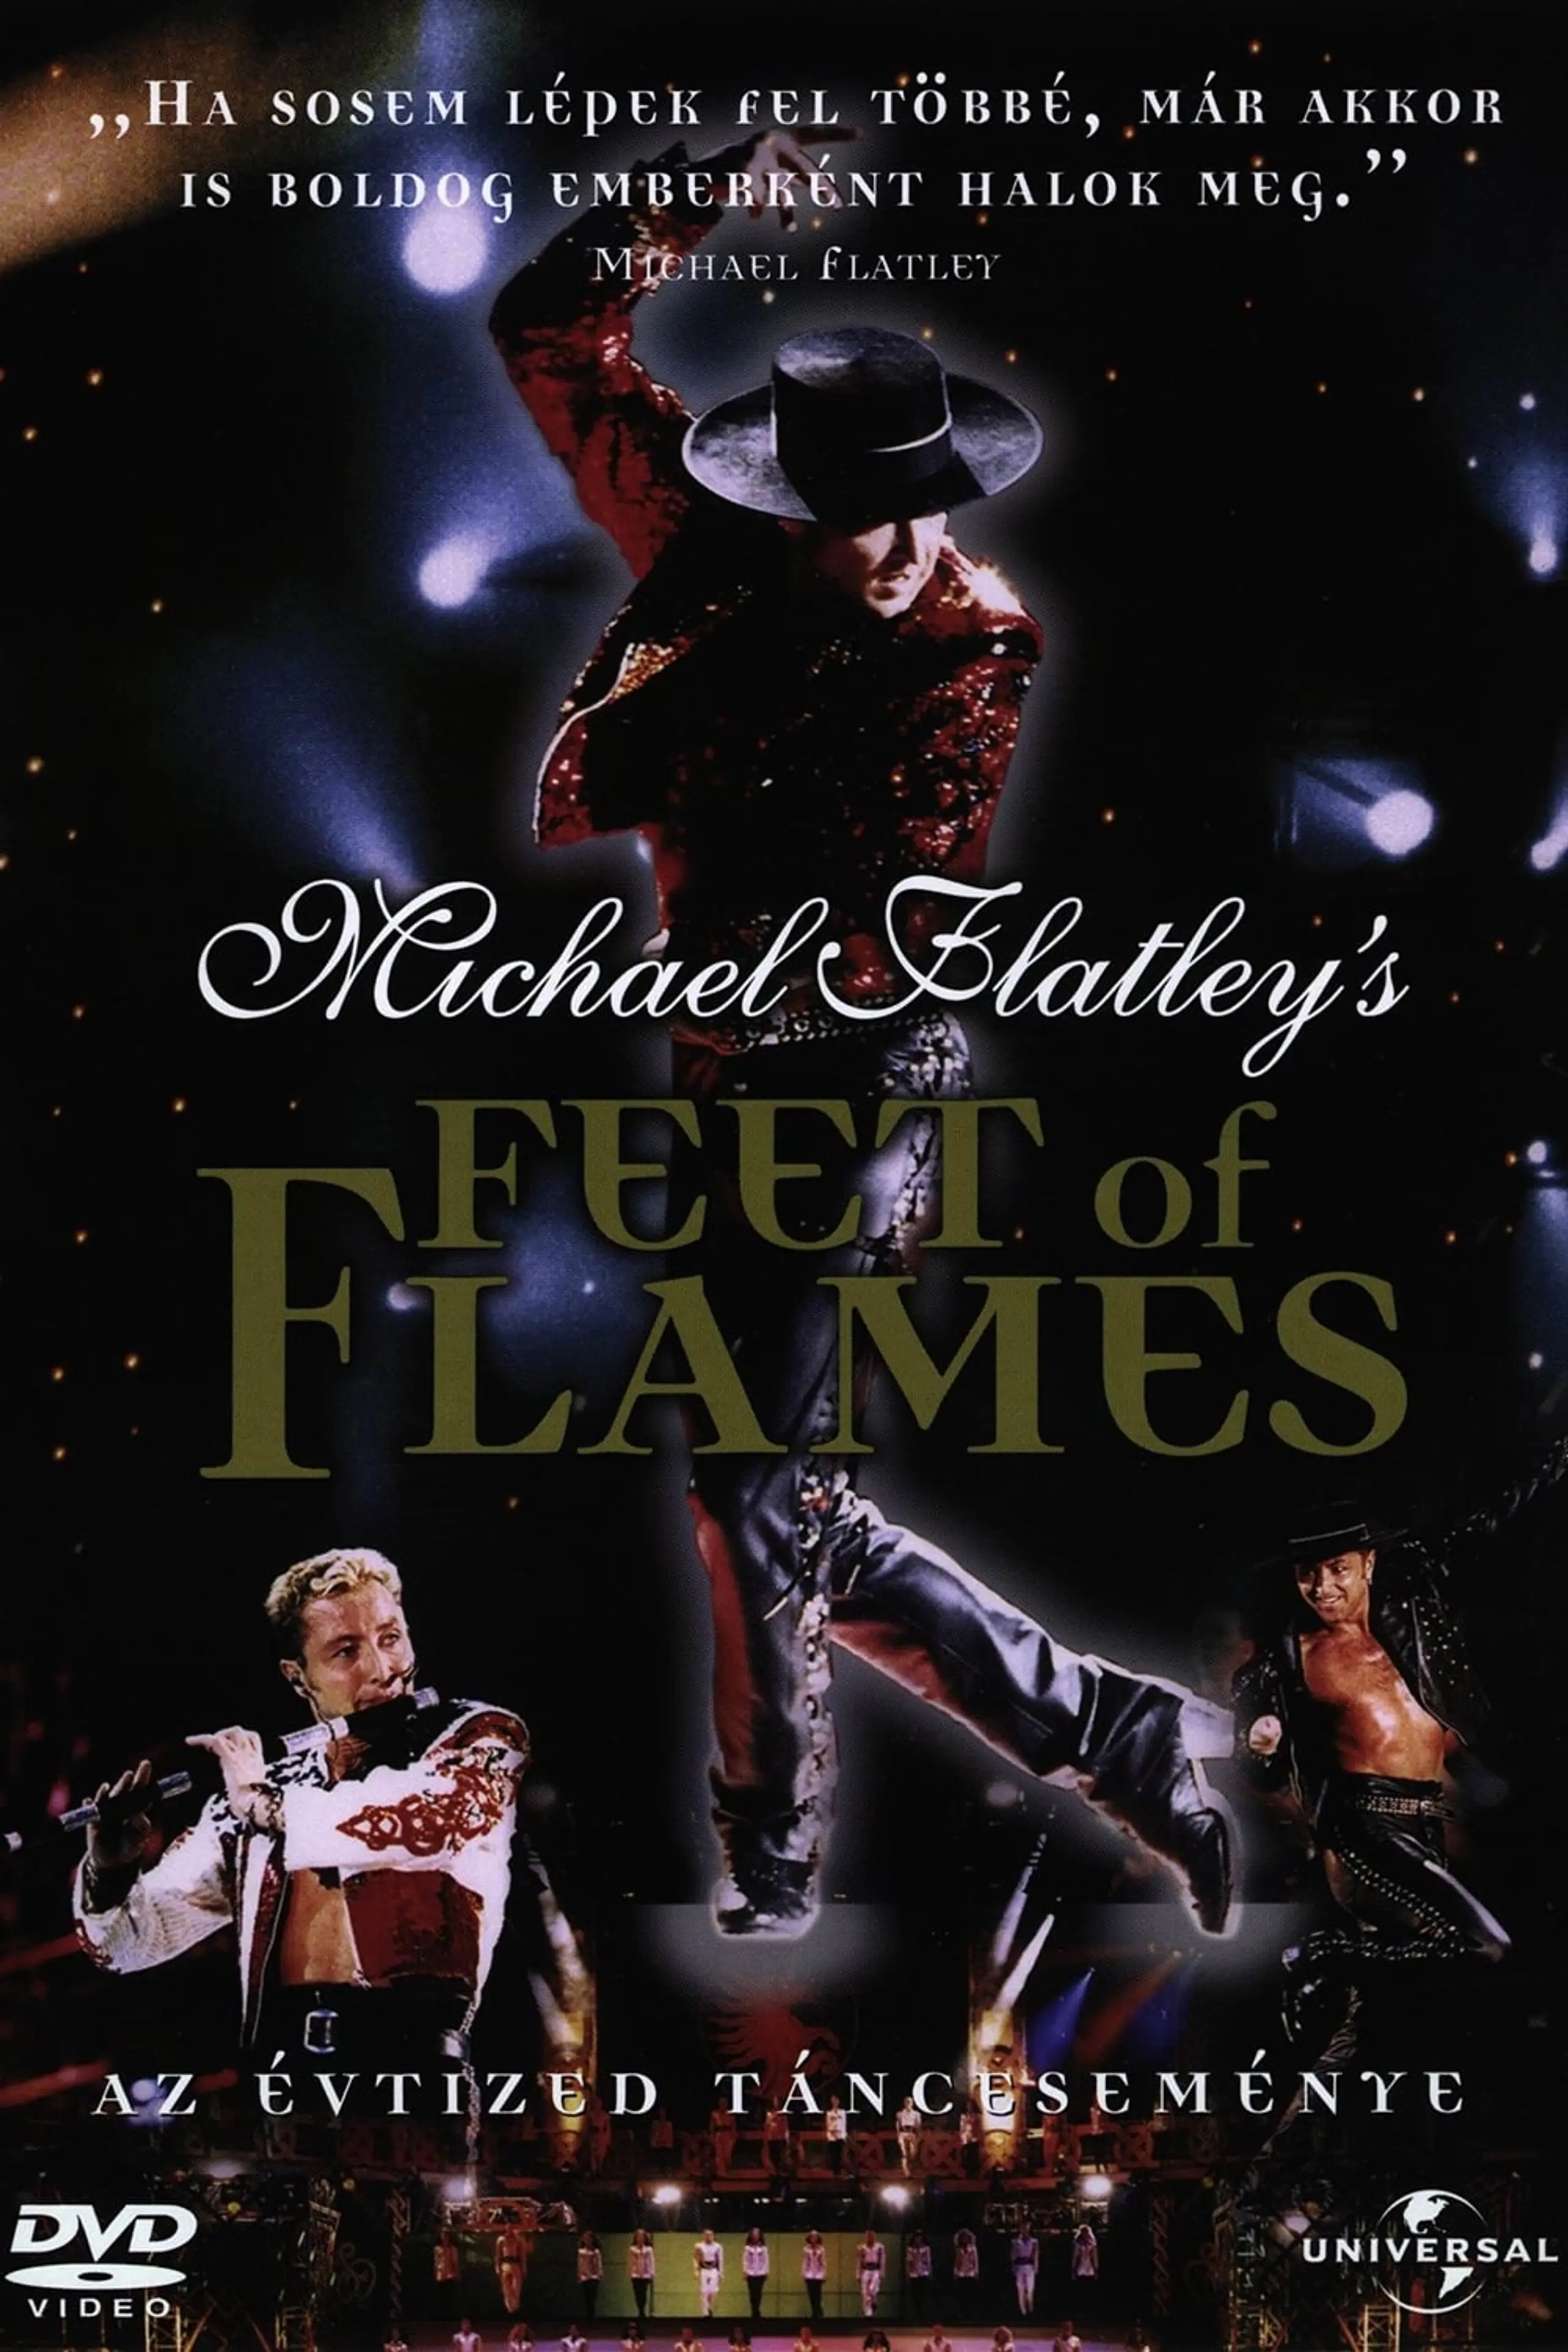 Feet of Flames